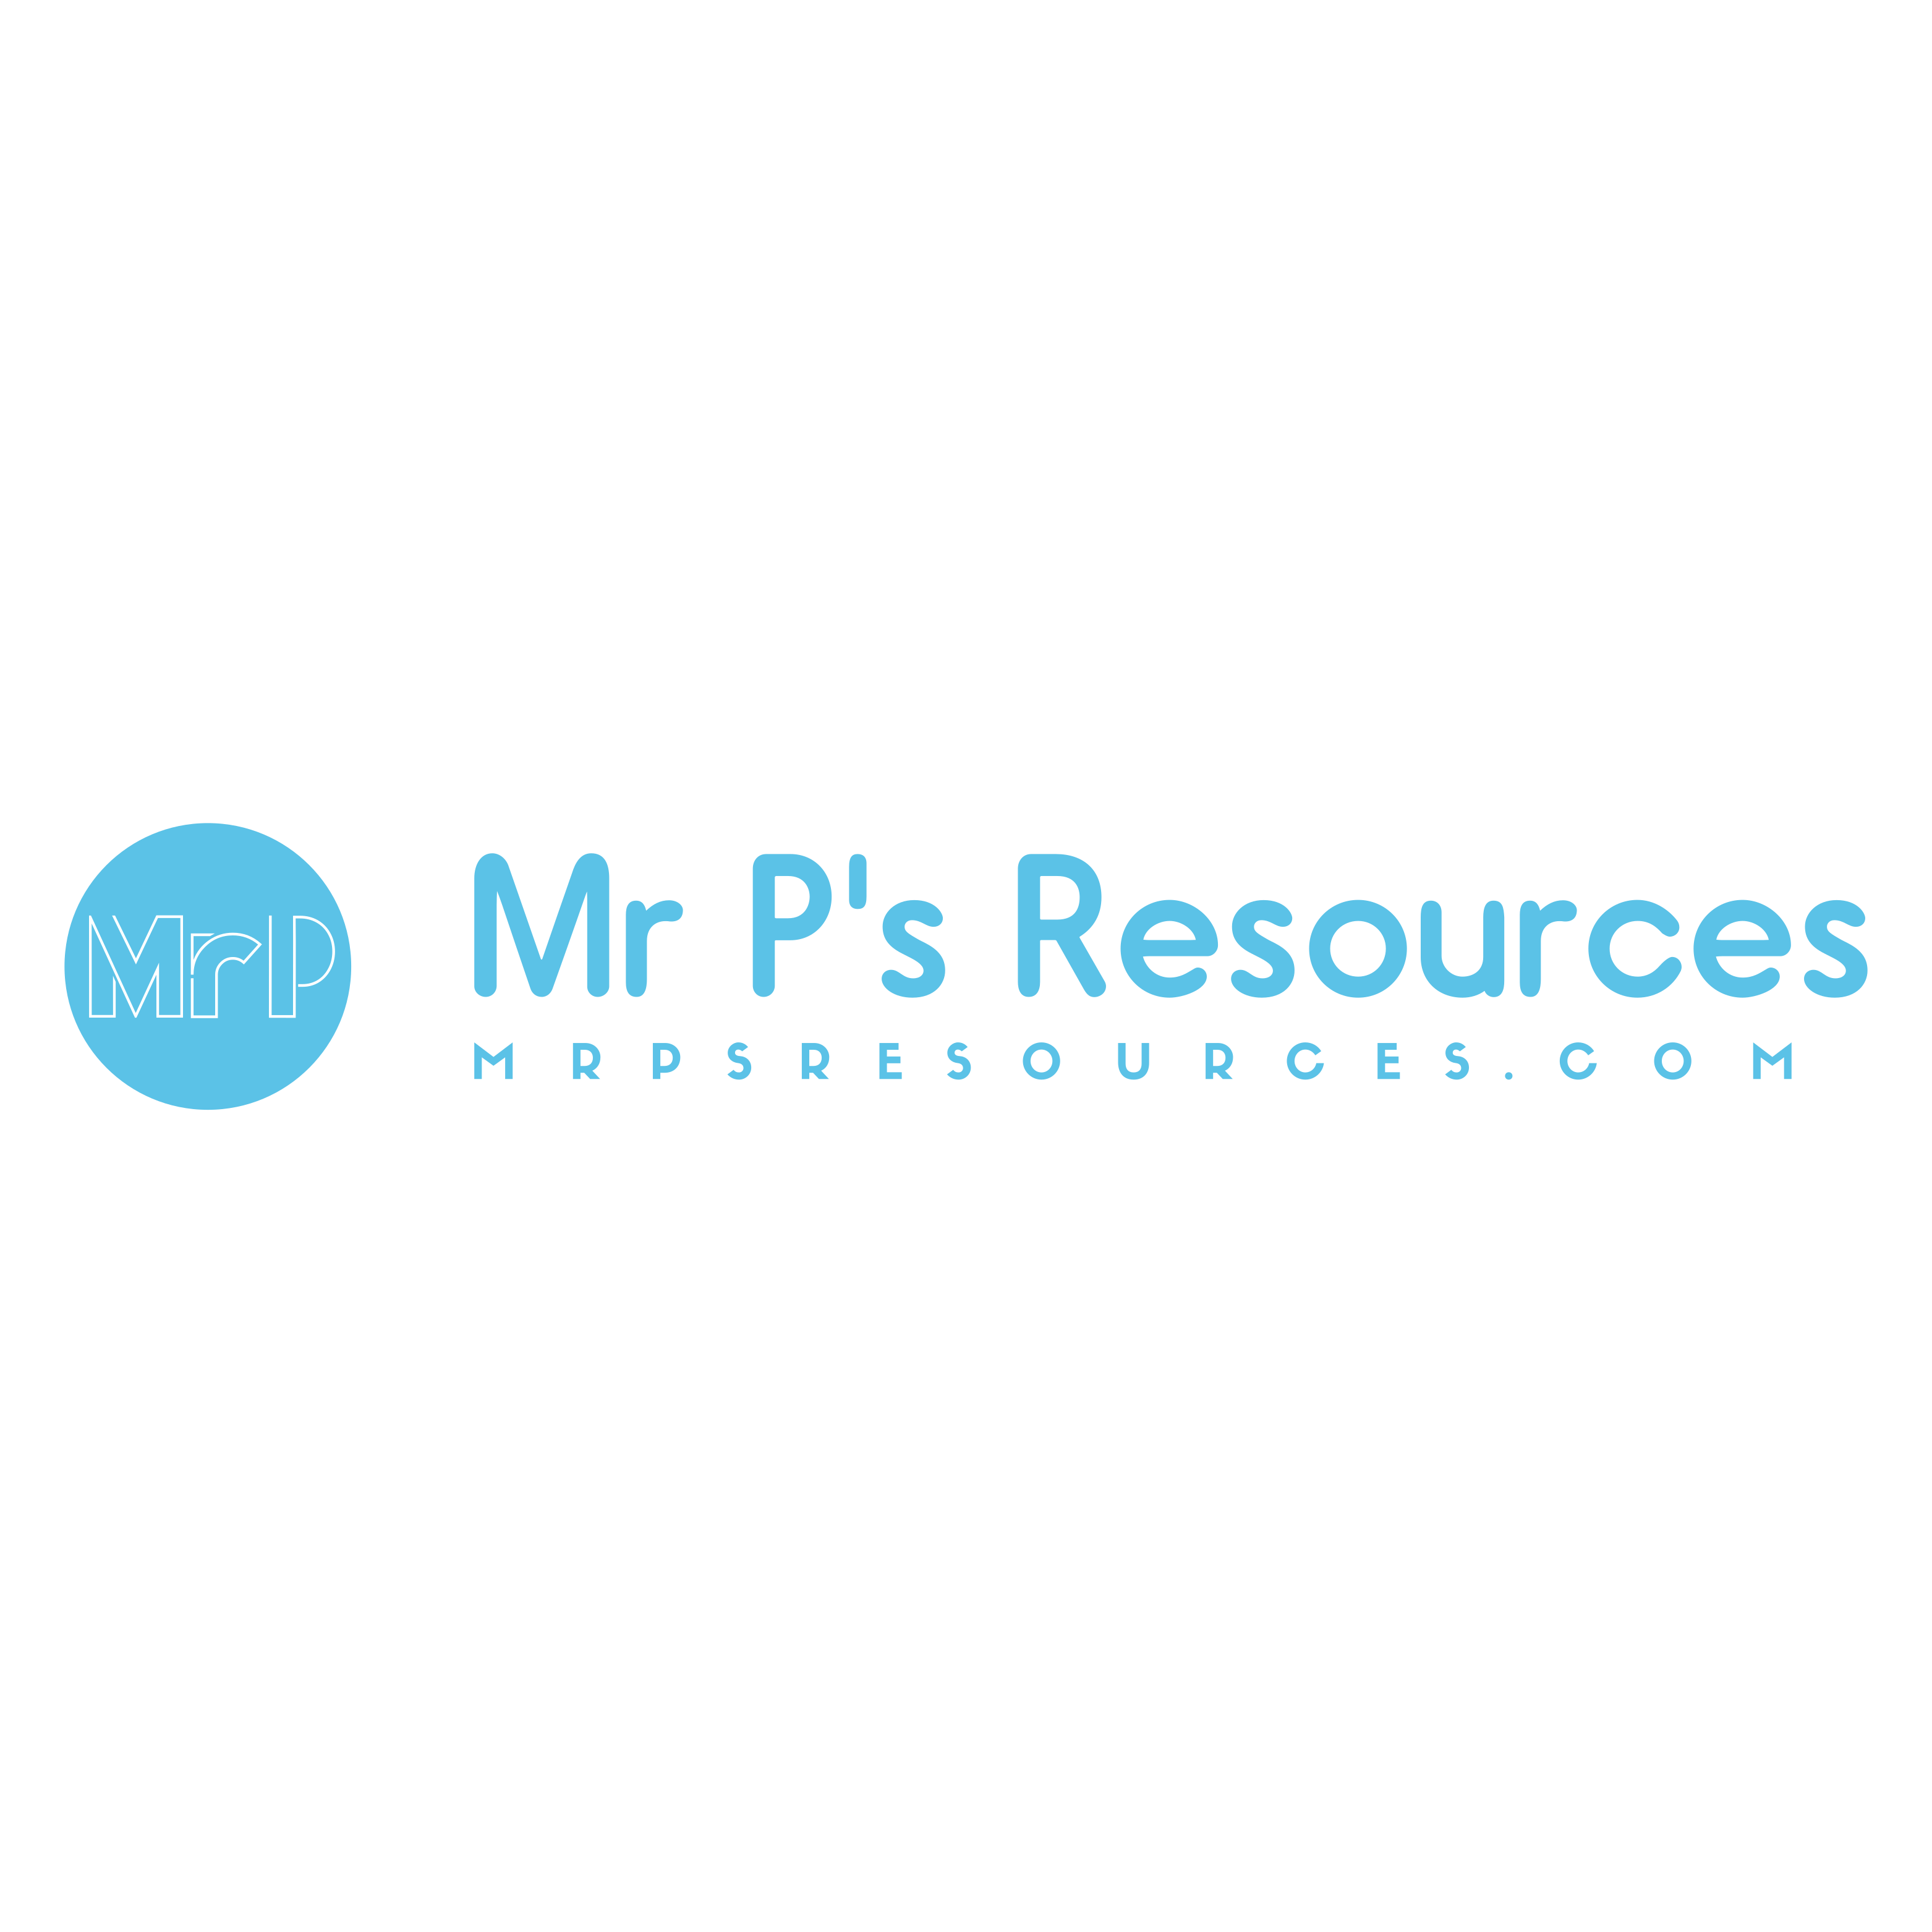 Mr P's Resources